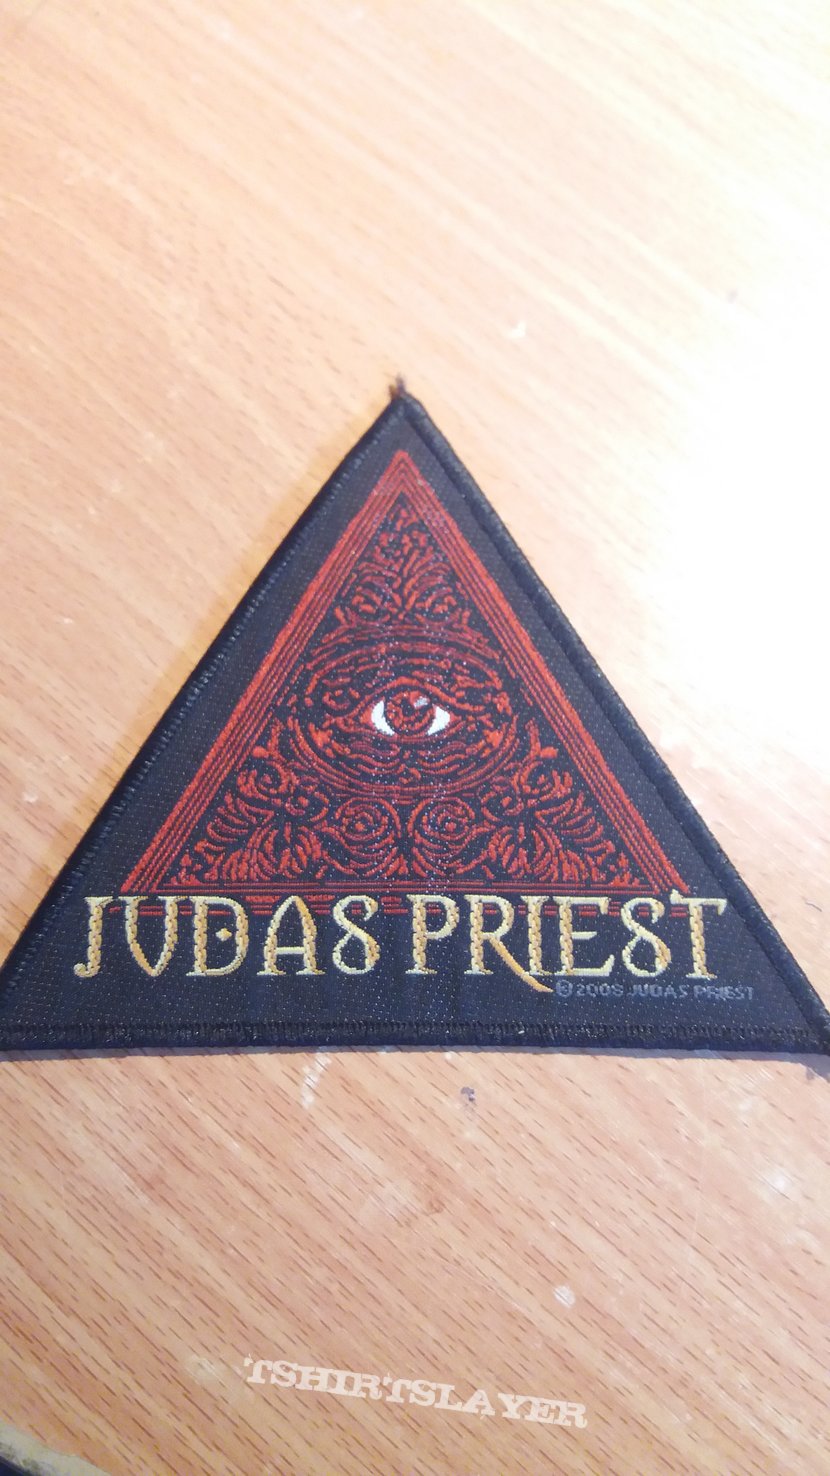 Judas priest patches